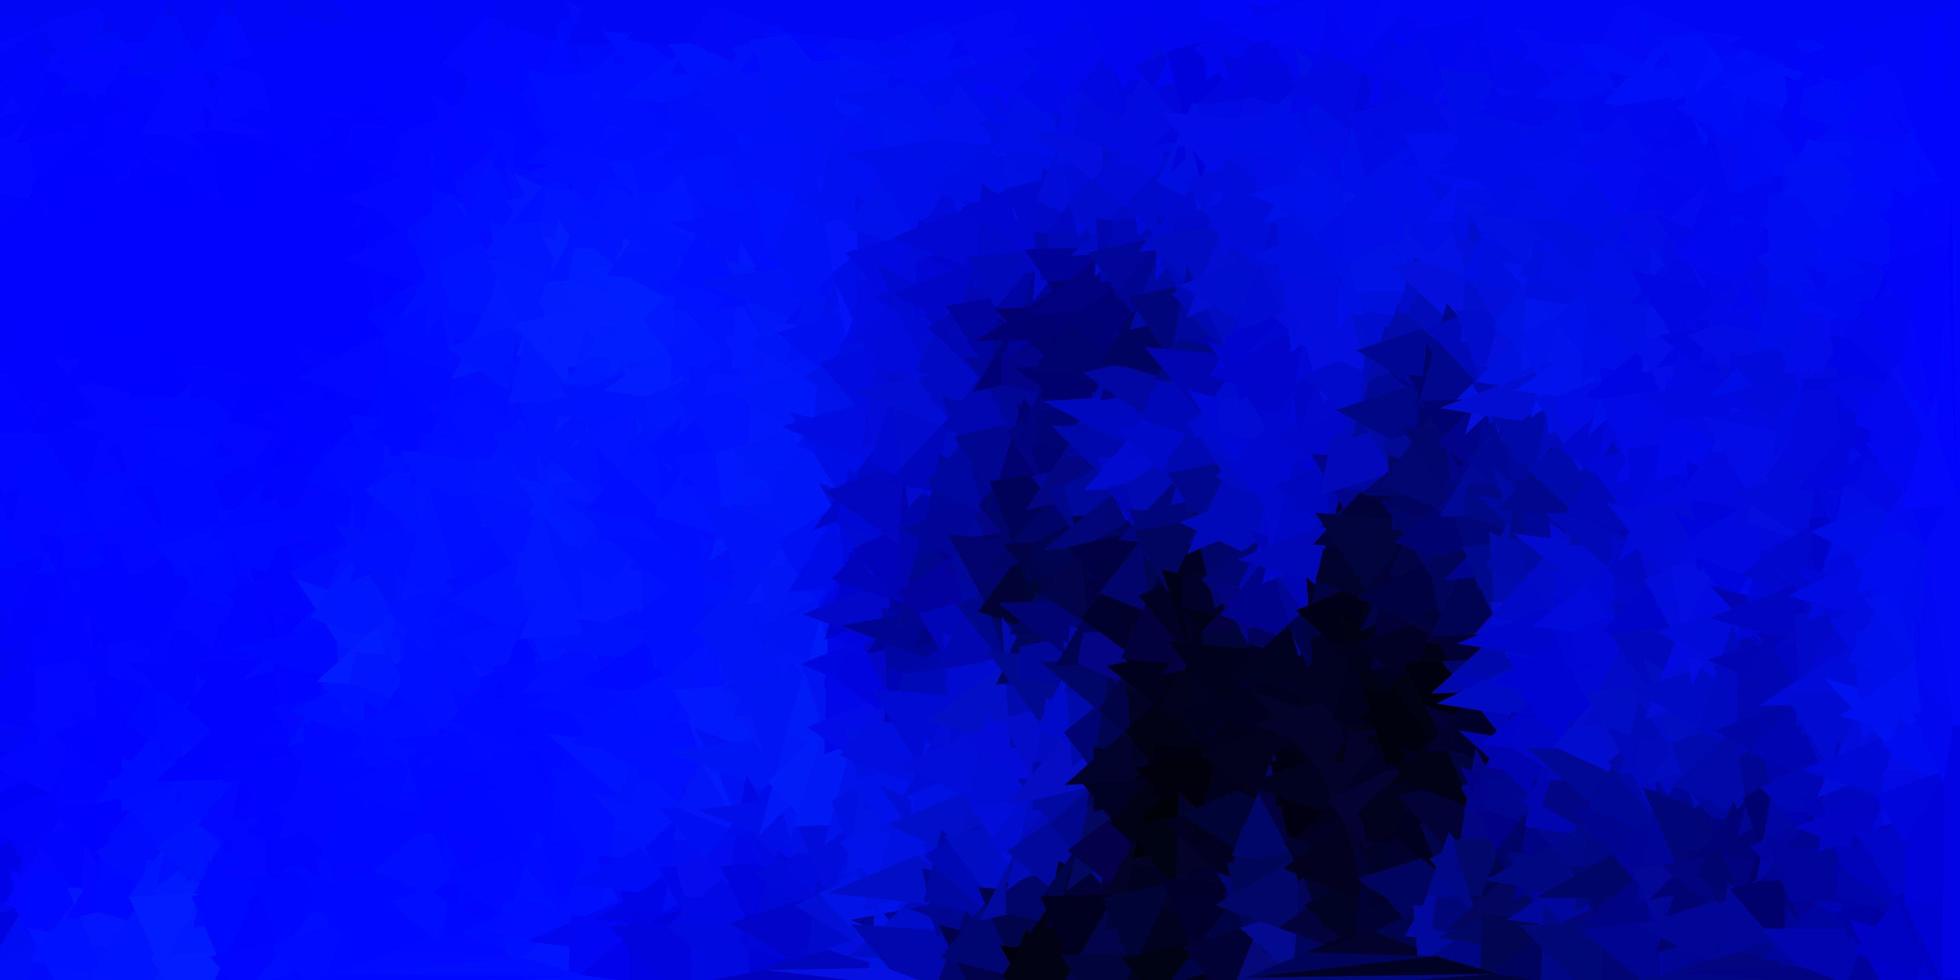 Dark blue vector polygonal background